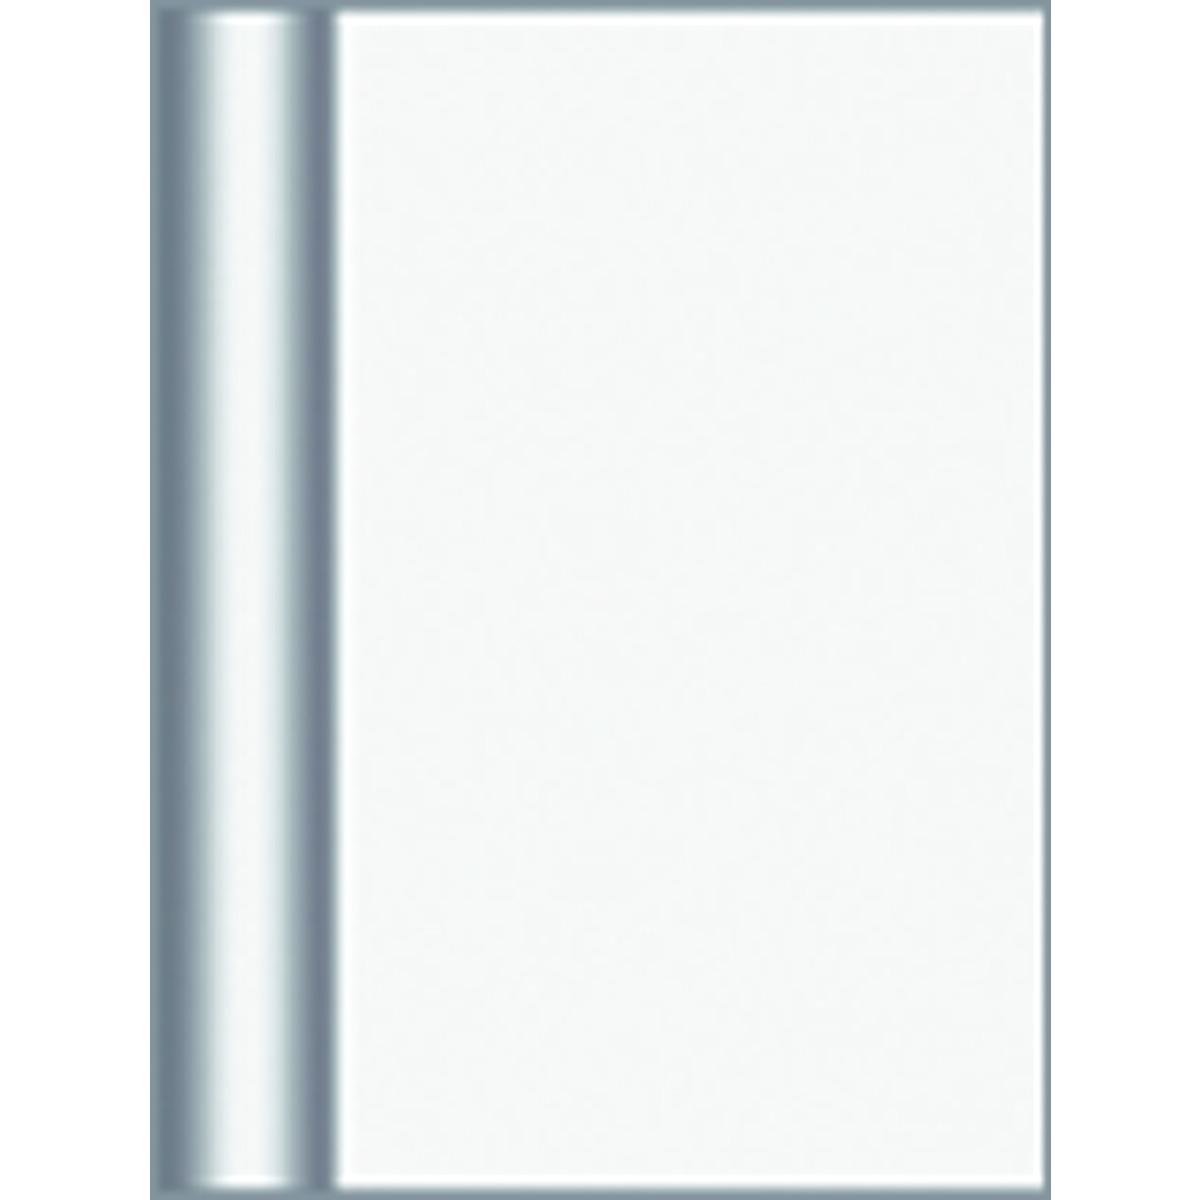 Nappe en rouleau Intissé  Gappy - Blanc  - 4,5 x 1,20 m - Intissé - Blanc